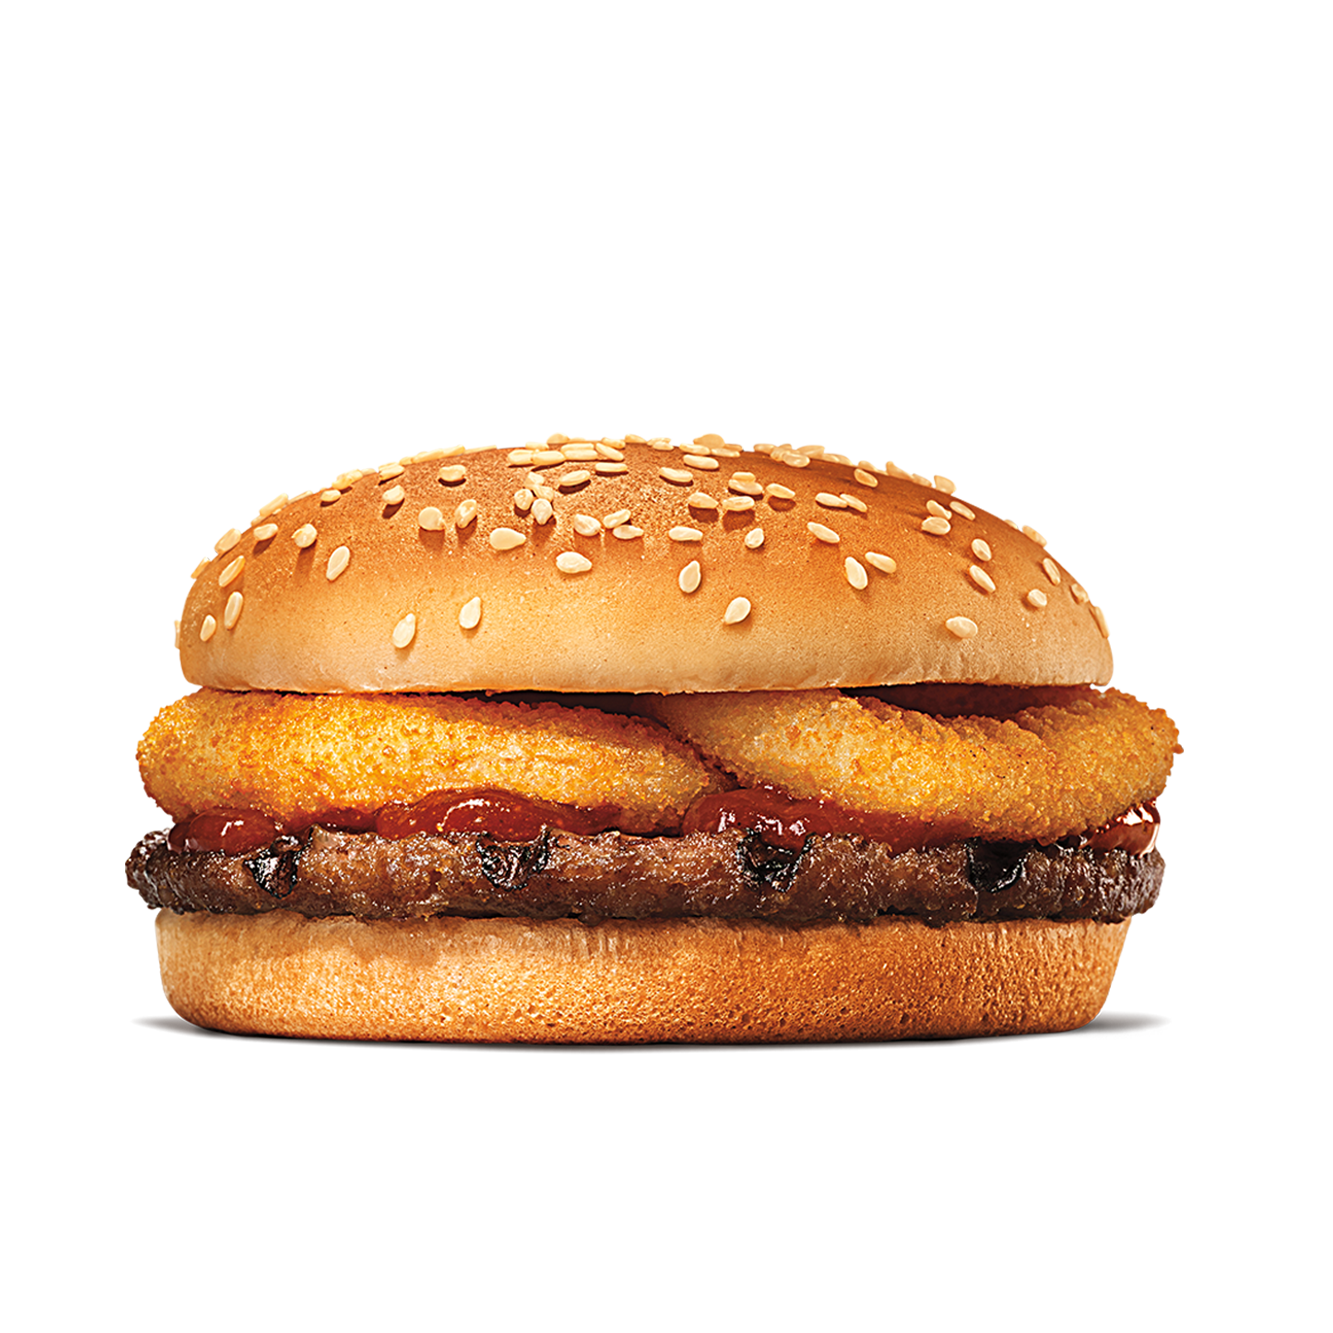 Burger King Wheat Ridge (303)424-3803